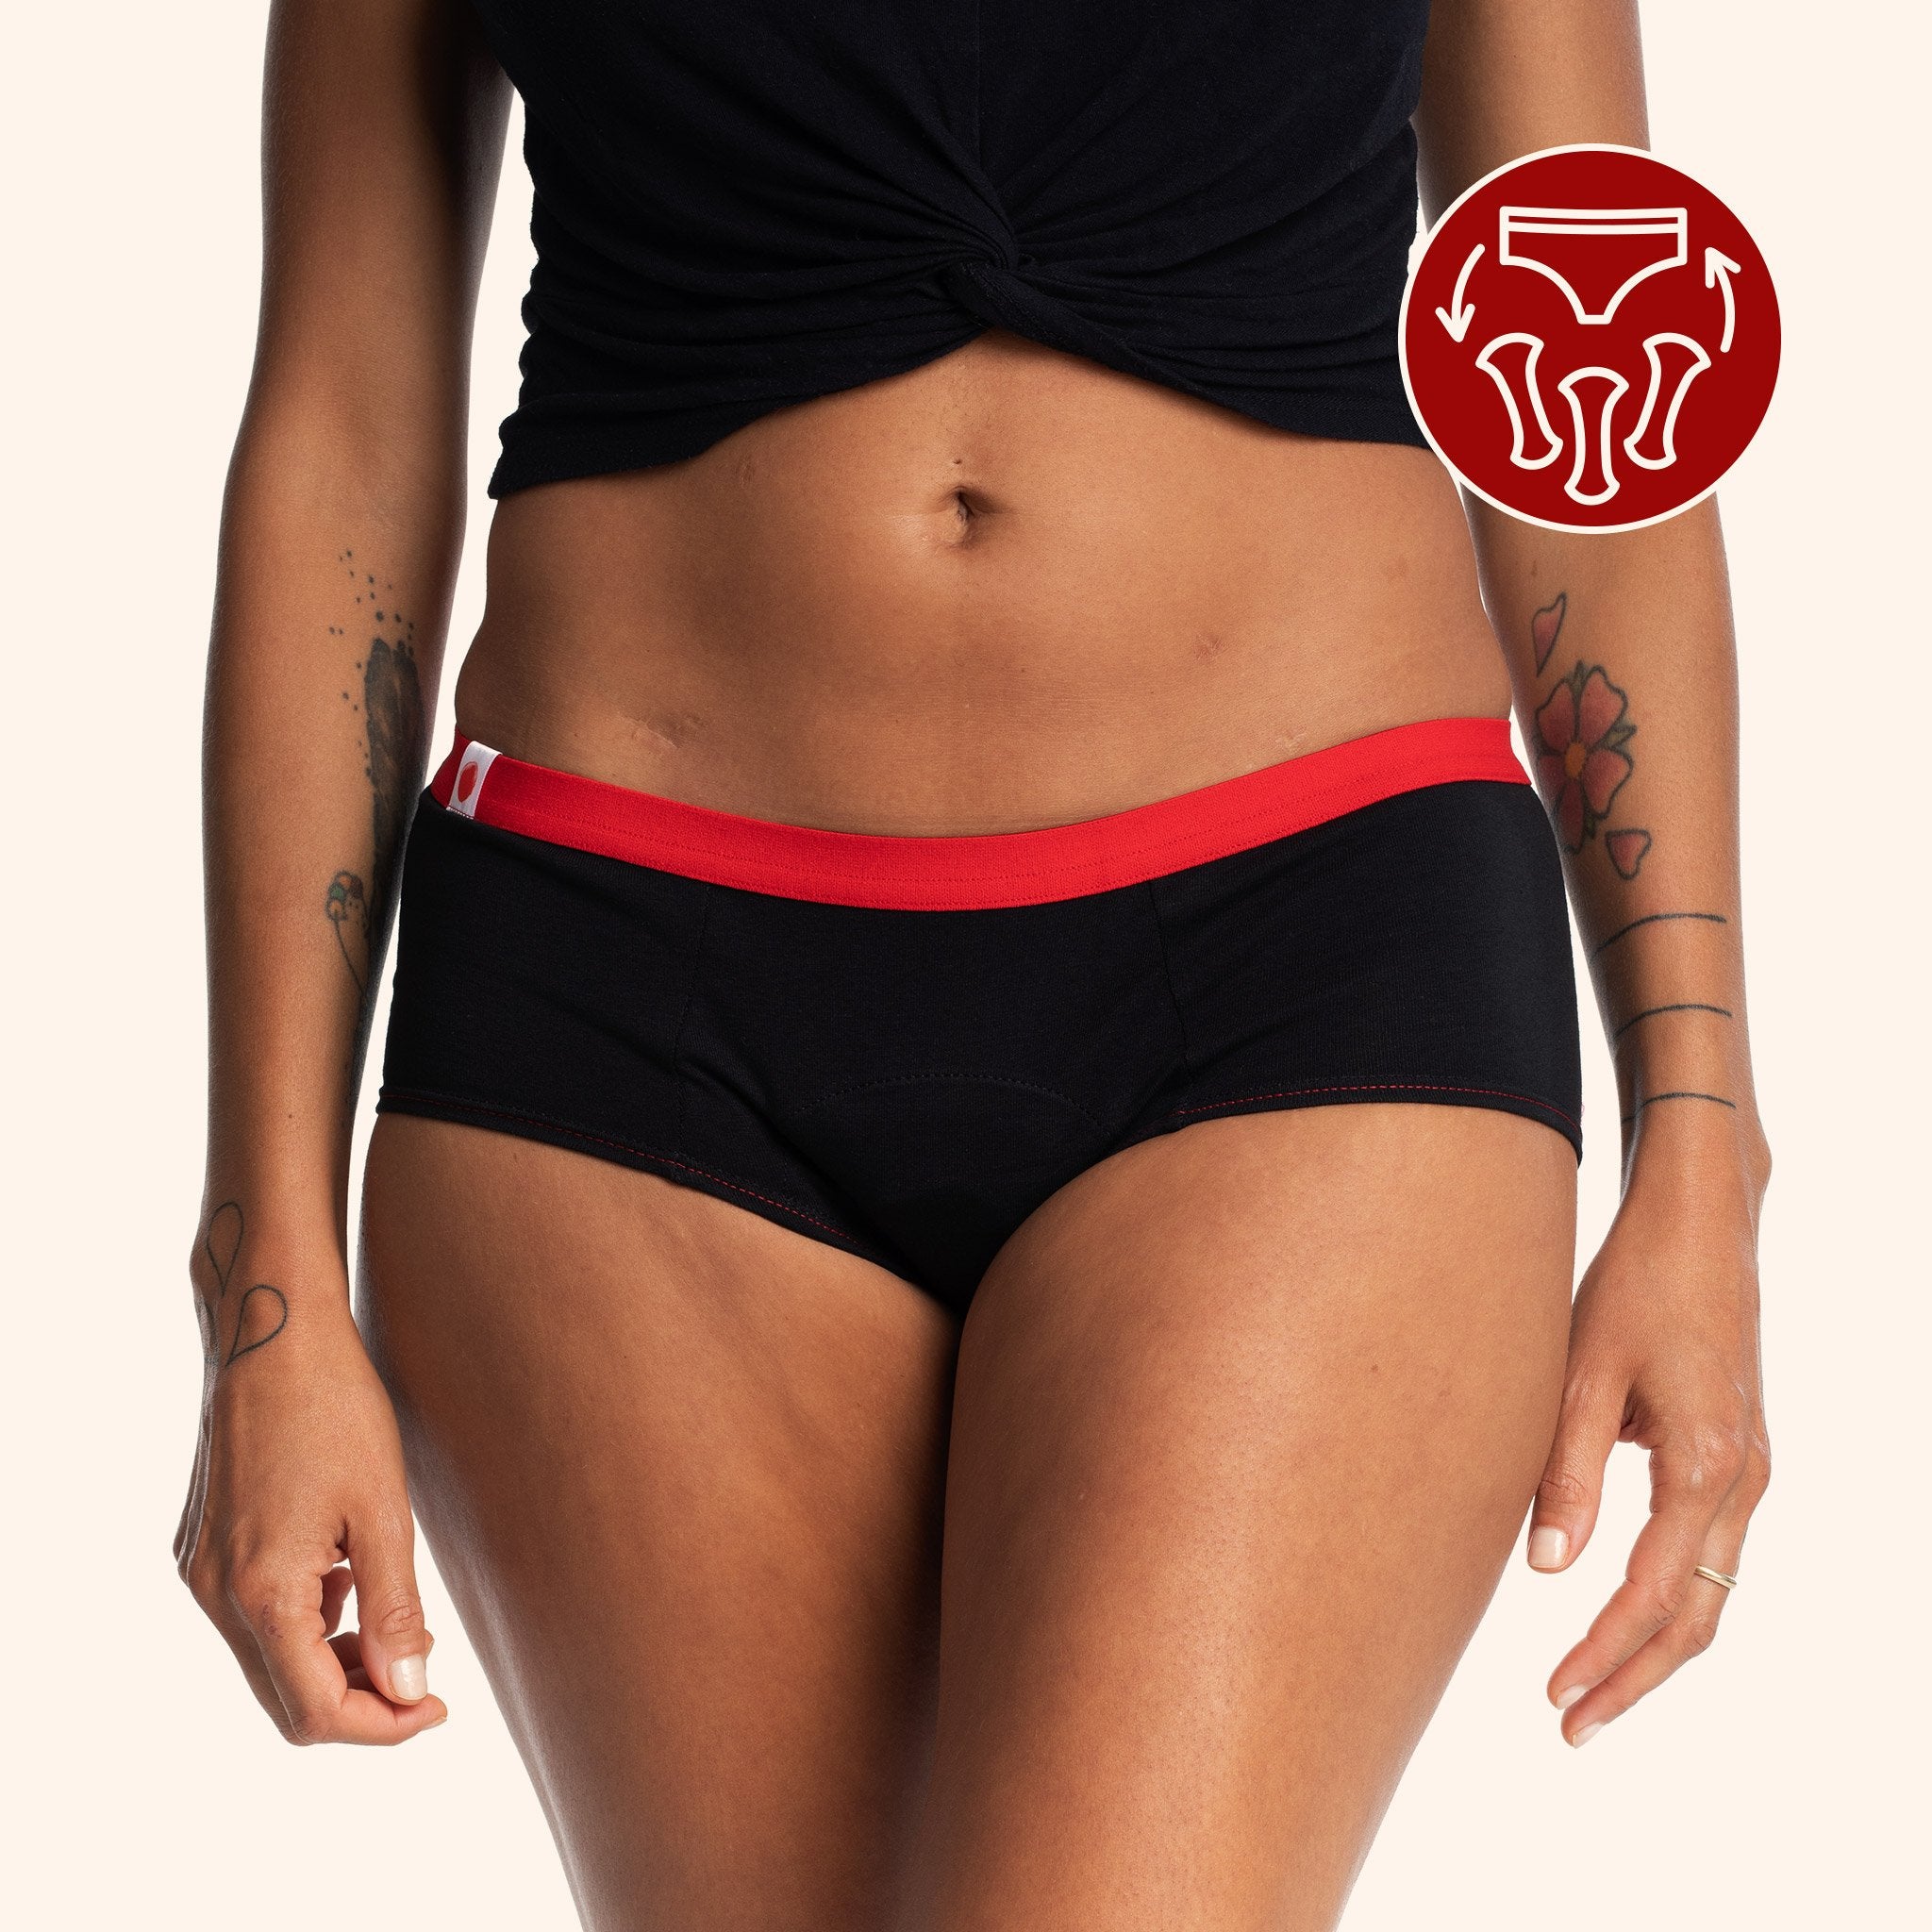 YLSHRF 10pcs Disposable Non-Woven Women Menstruation Underwear For